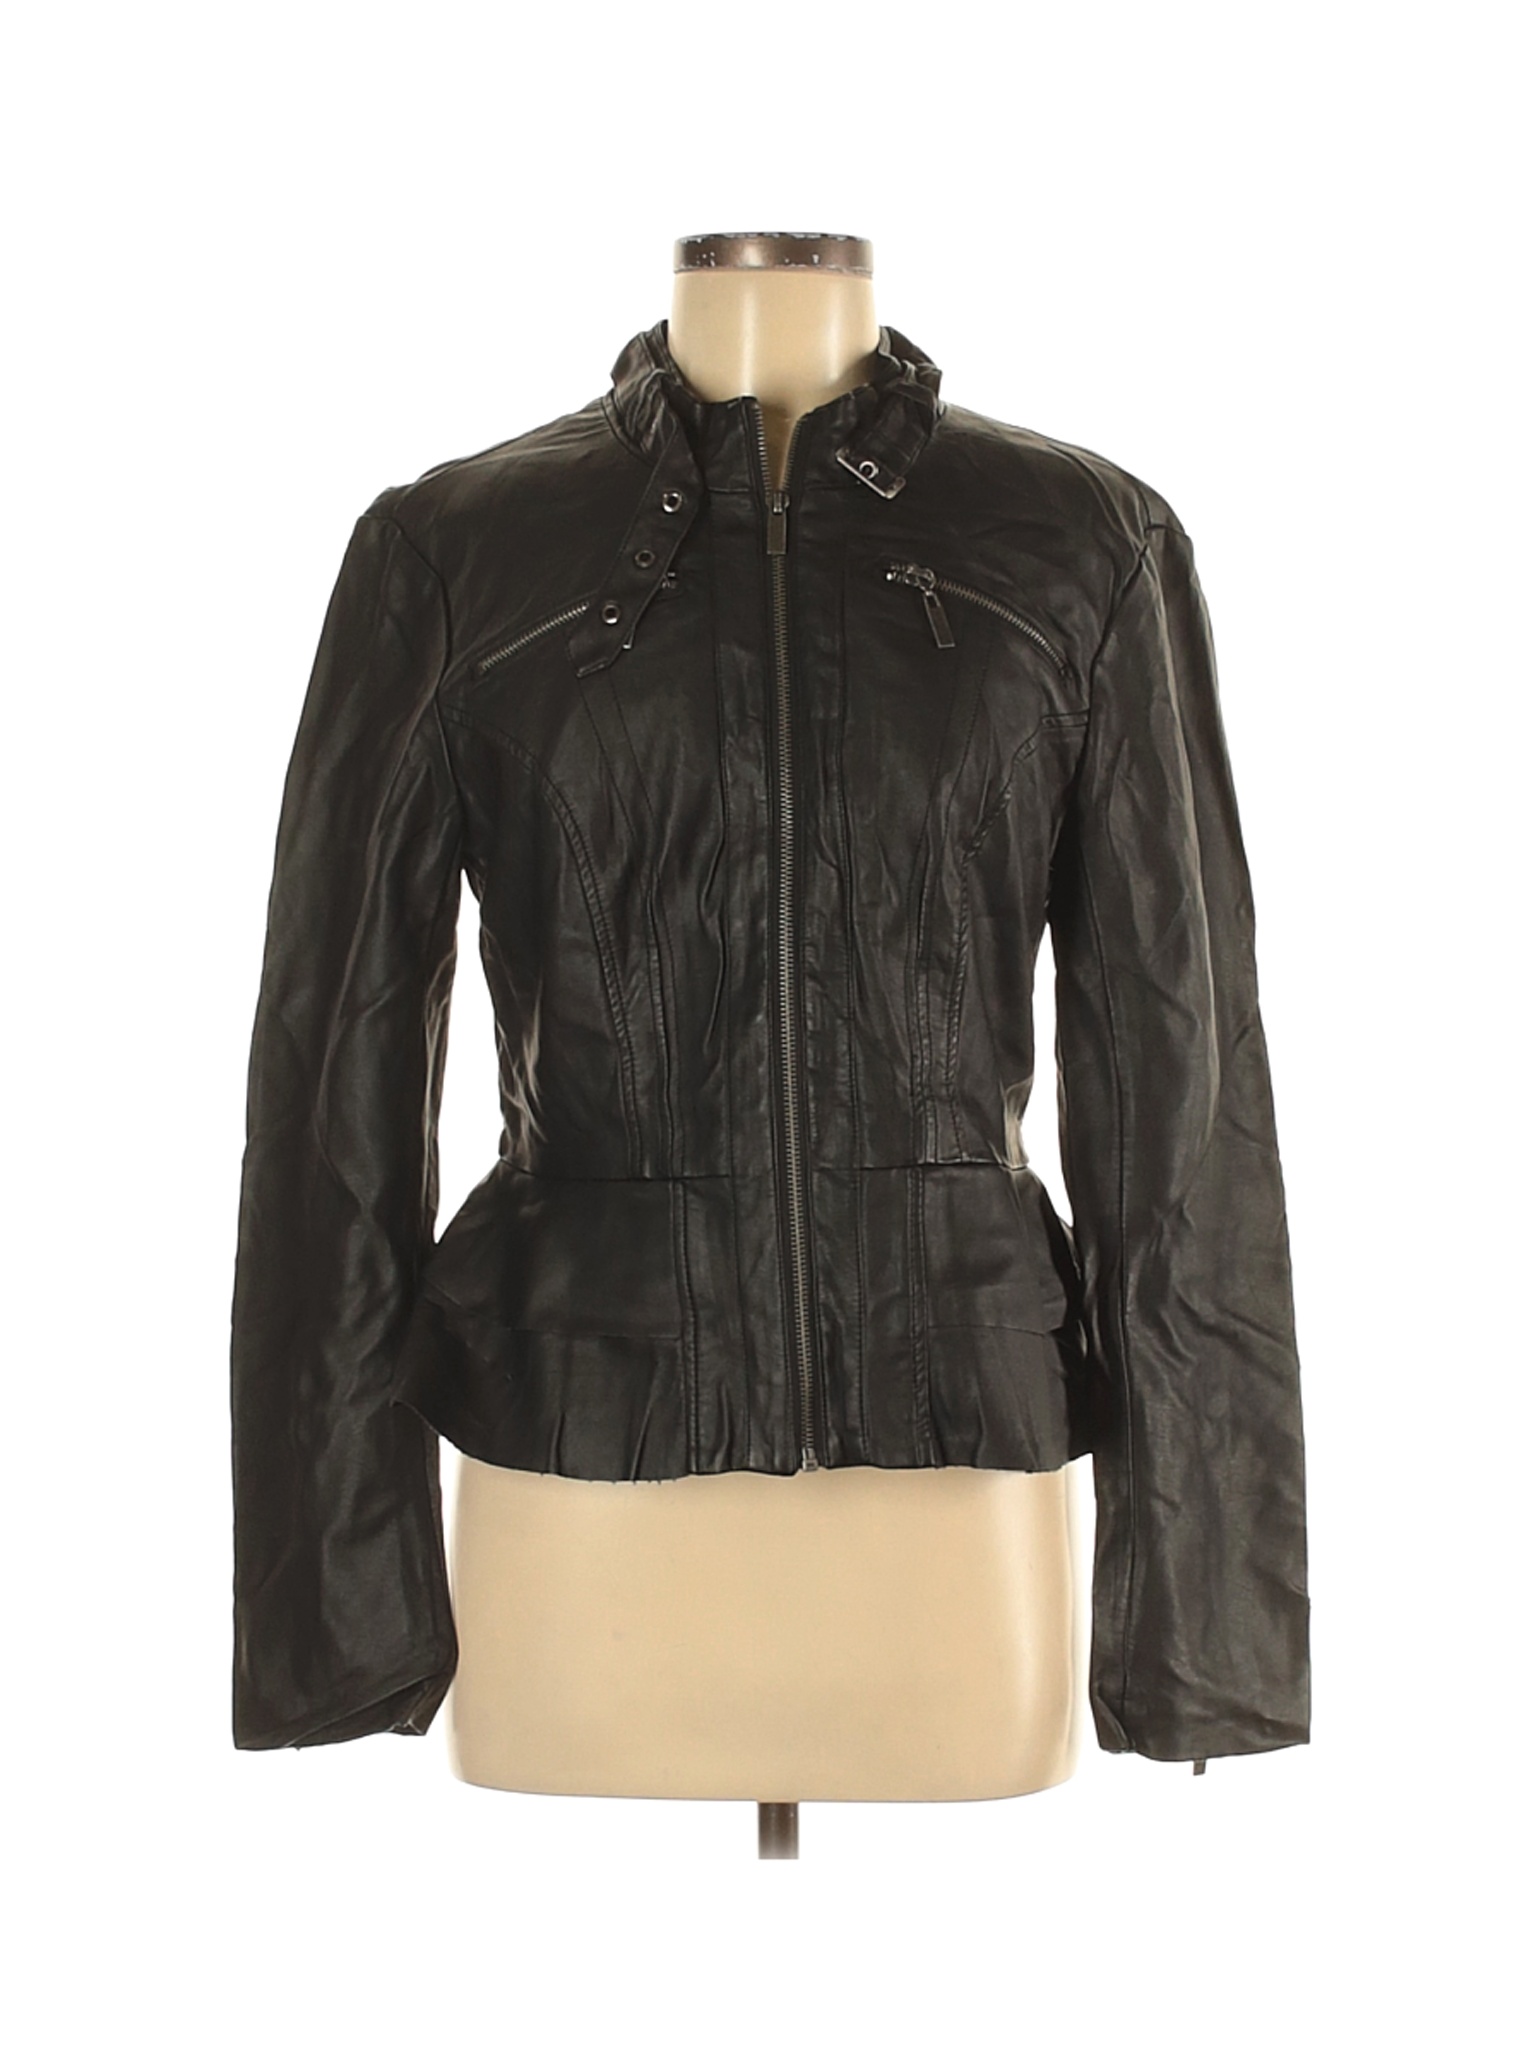 Blanc Noir Women Black Faux Leather Jacket M | eBay